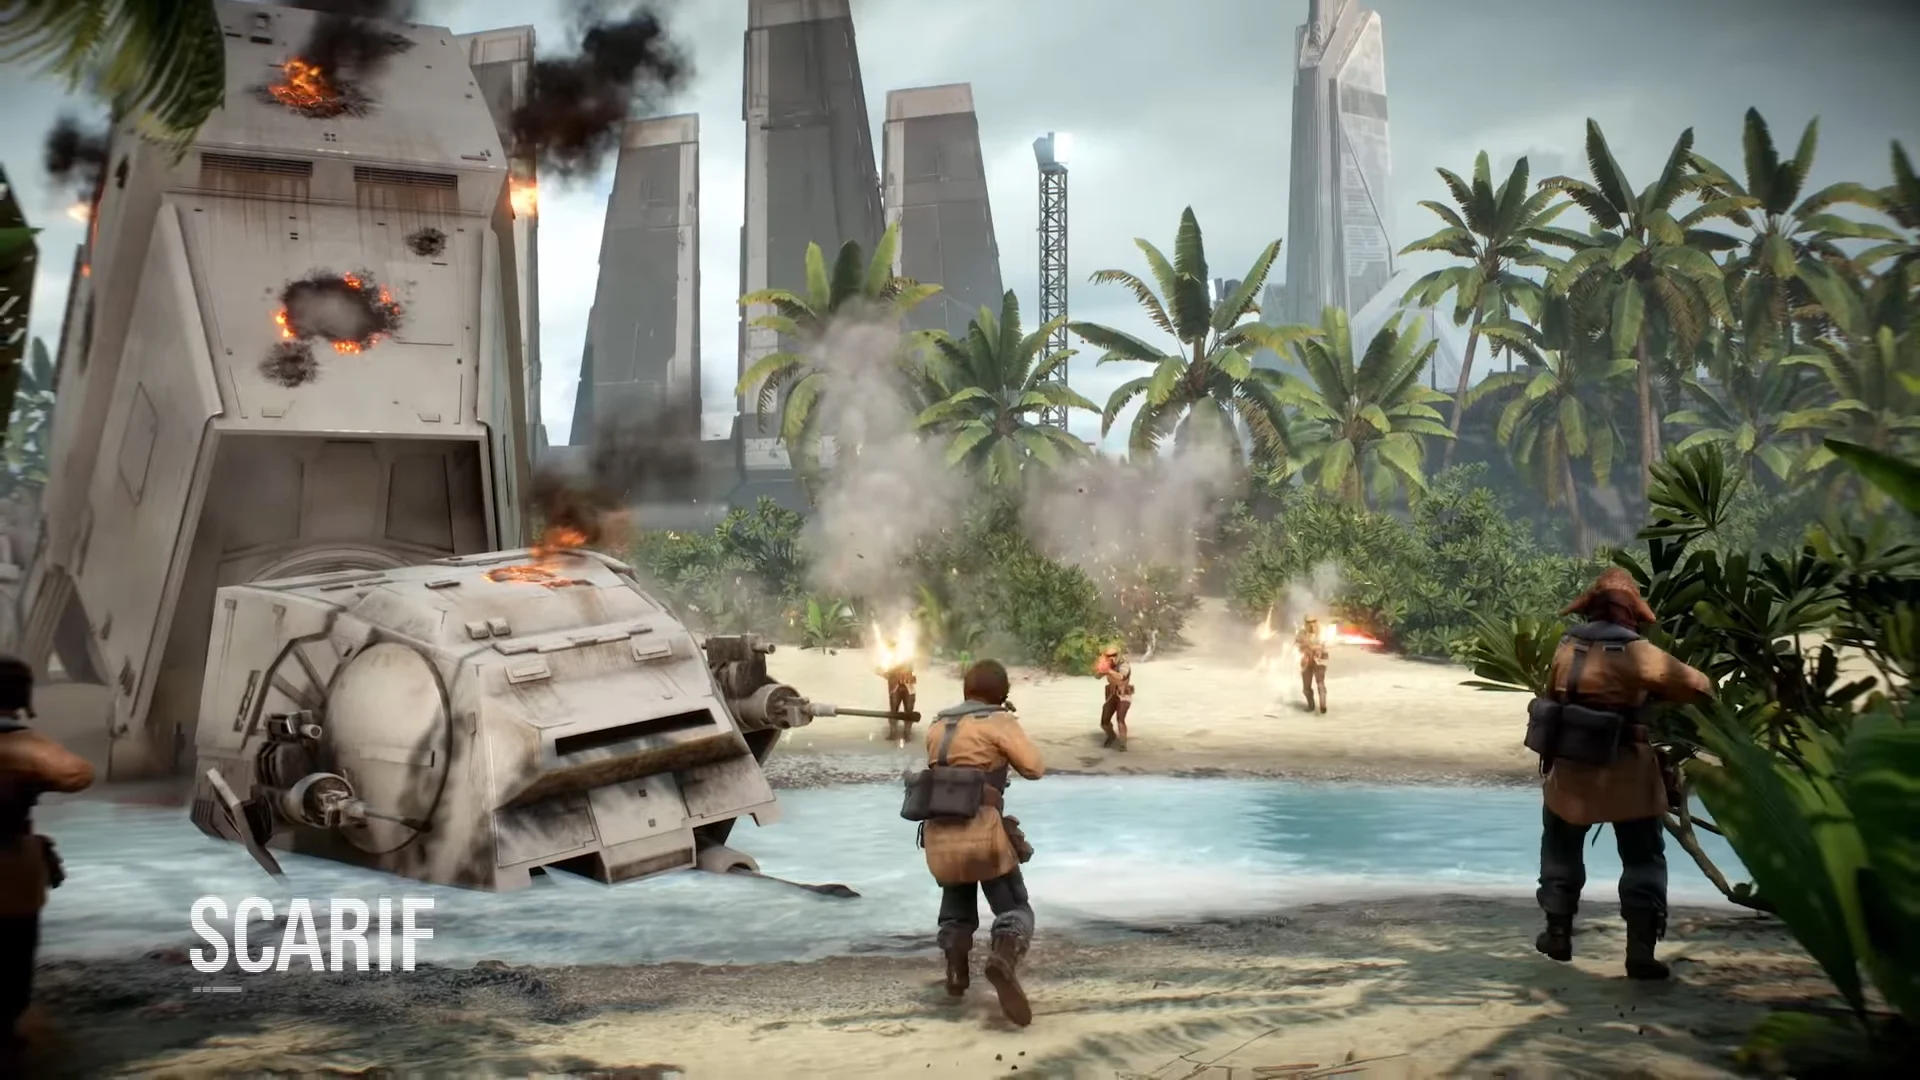 Star Wars Battlefront 2’s The Battle of Scarif is its final update